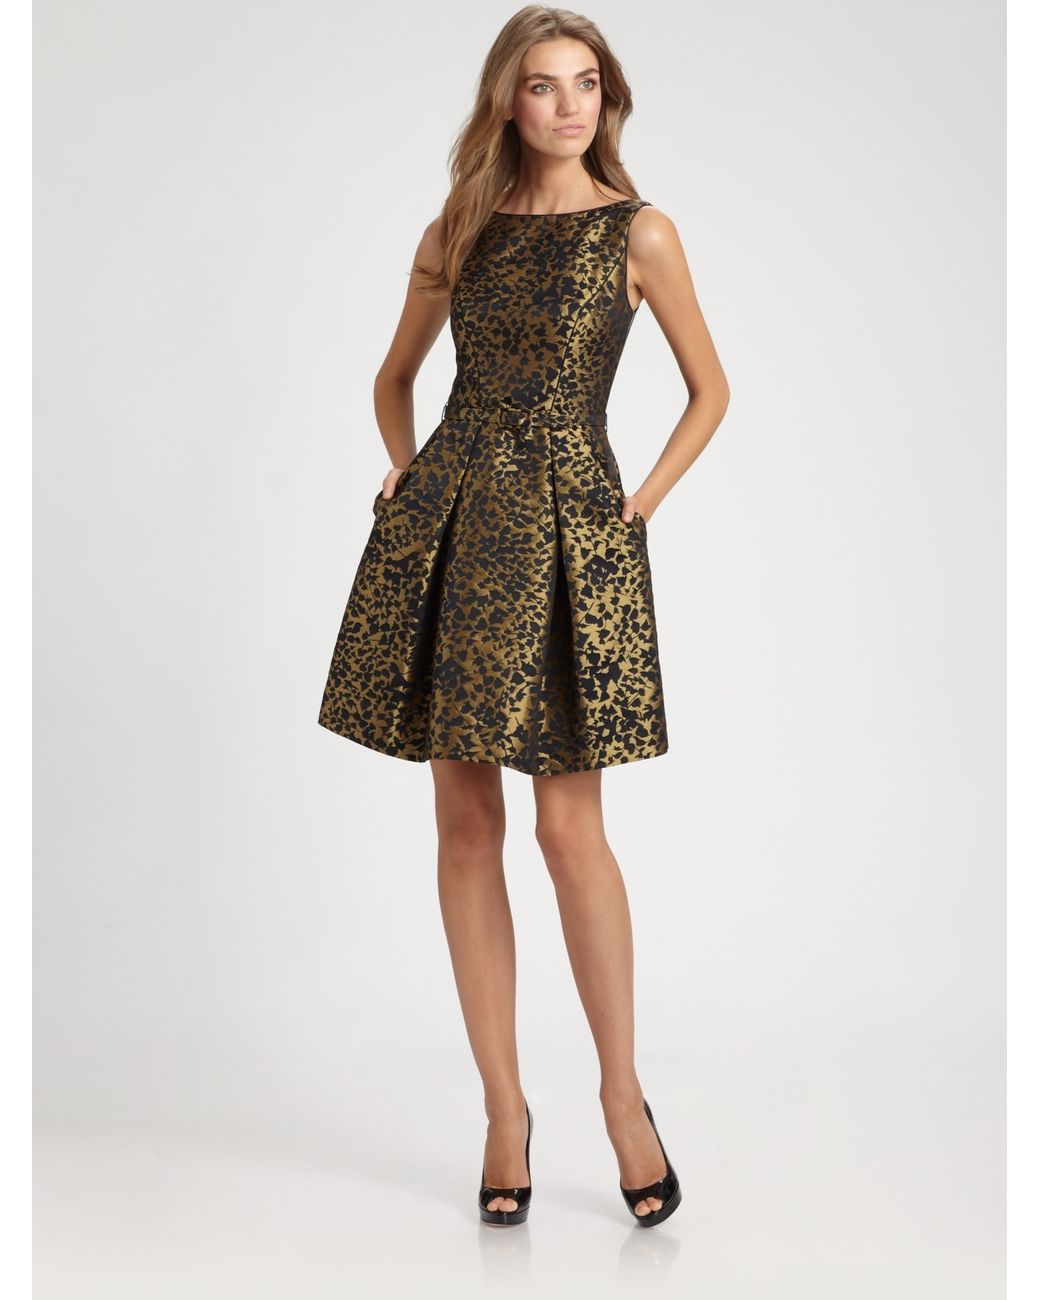 THEIA Brocade Dress in Gold (Metallic) | Lyst